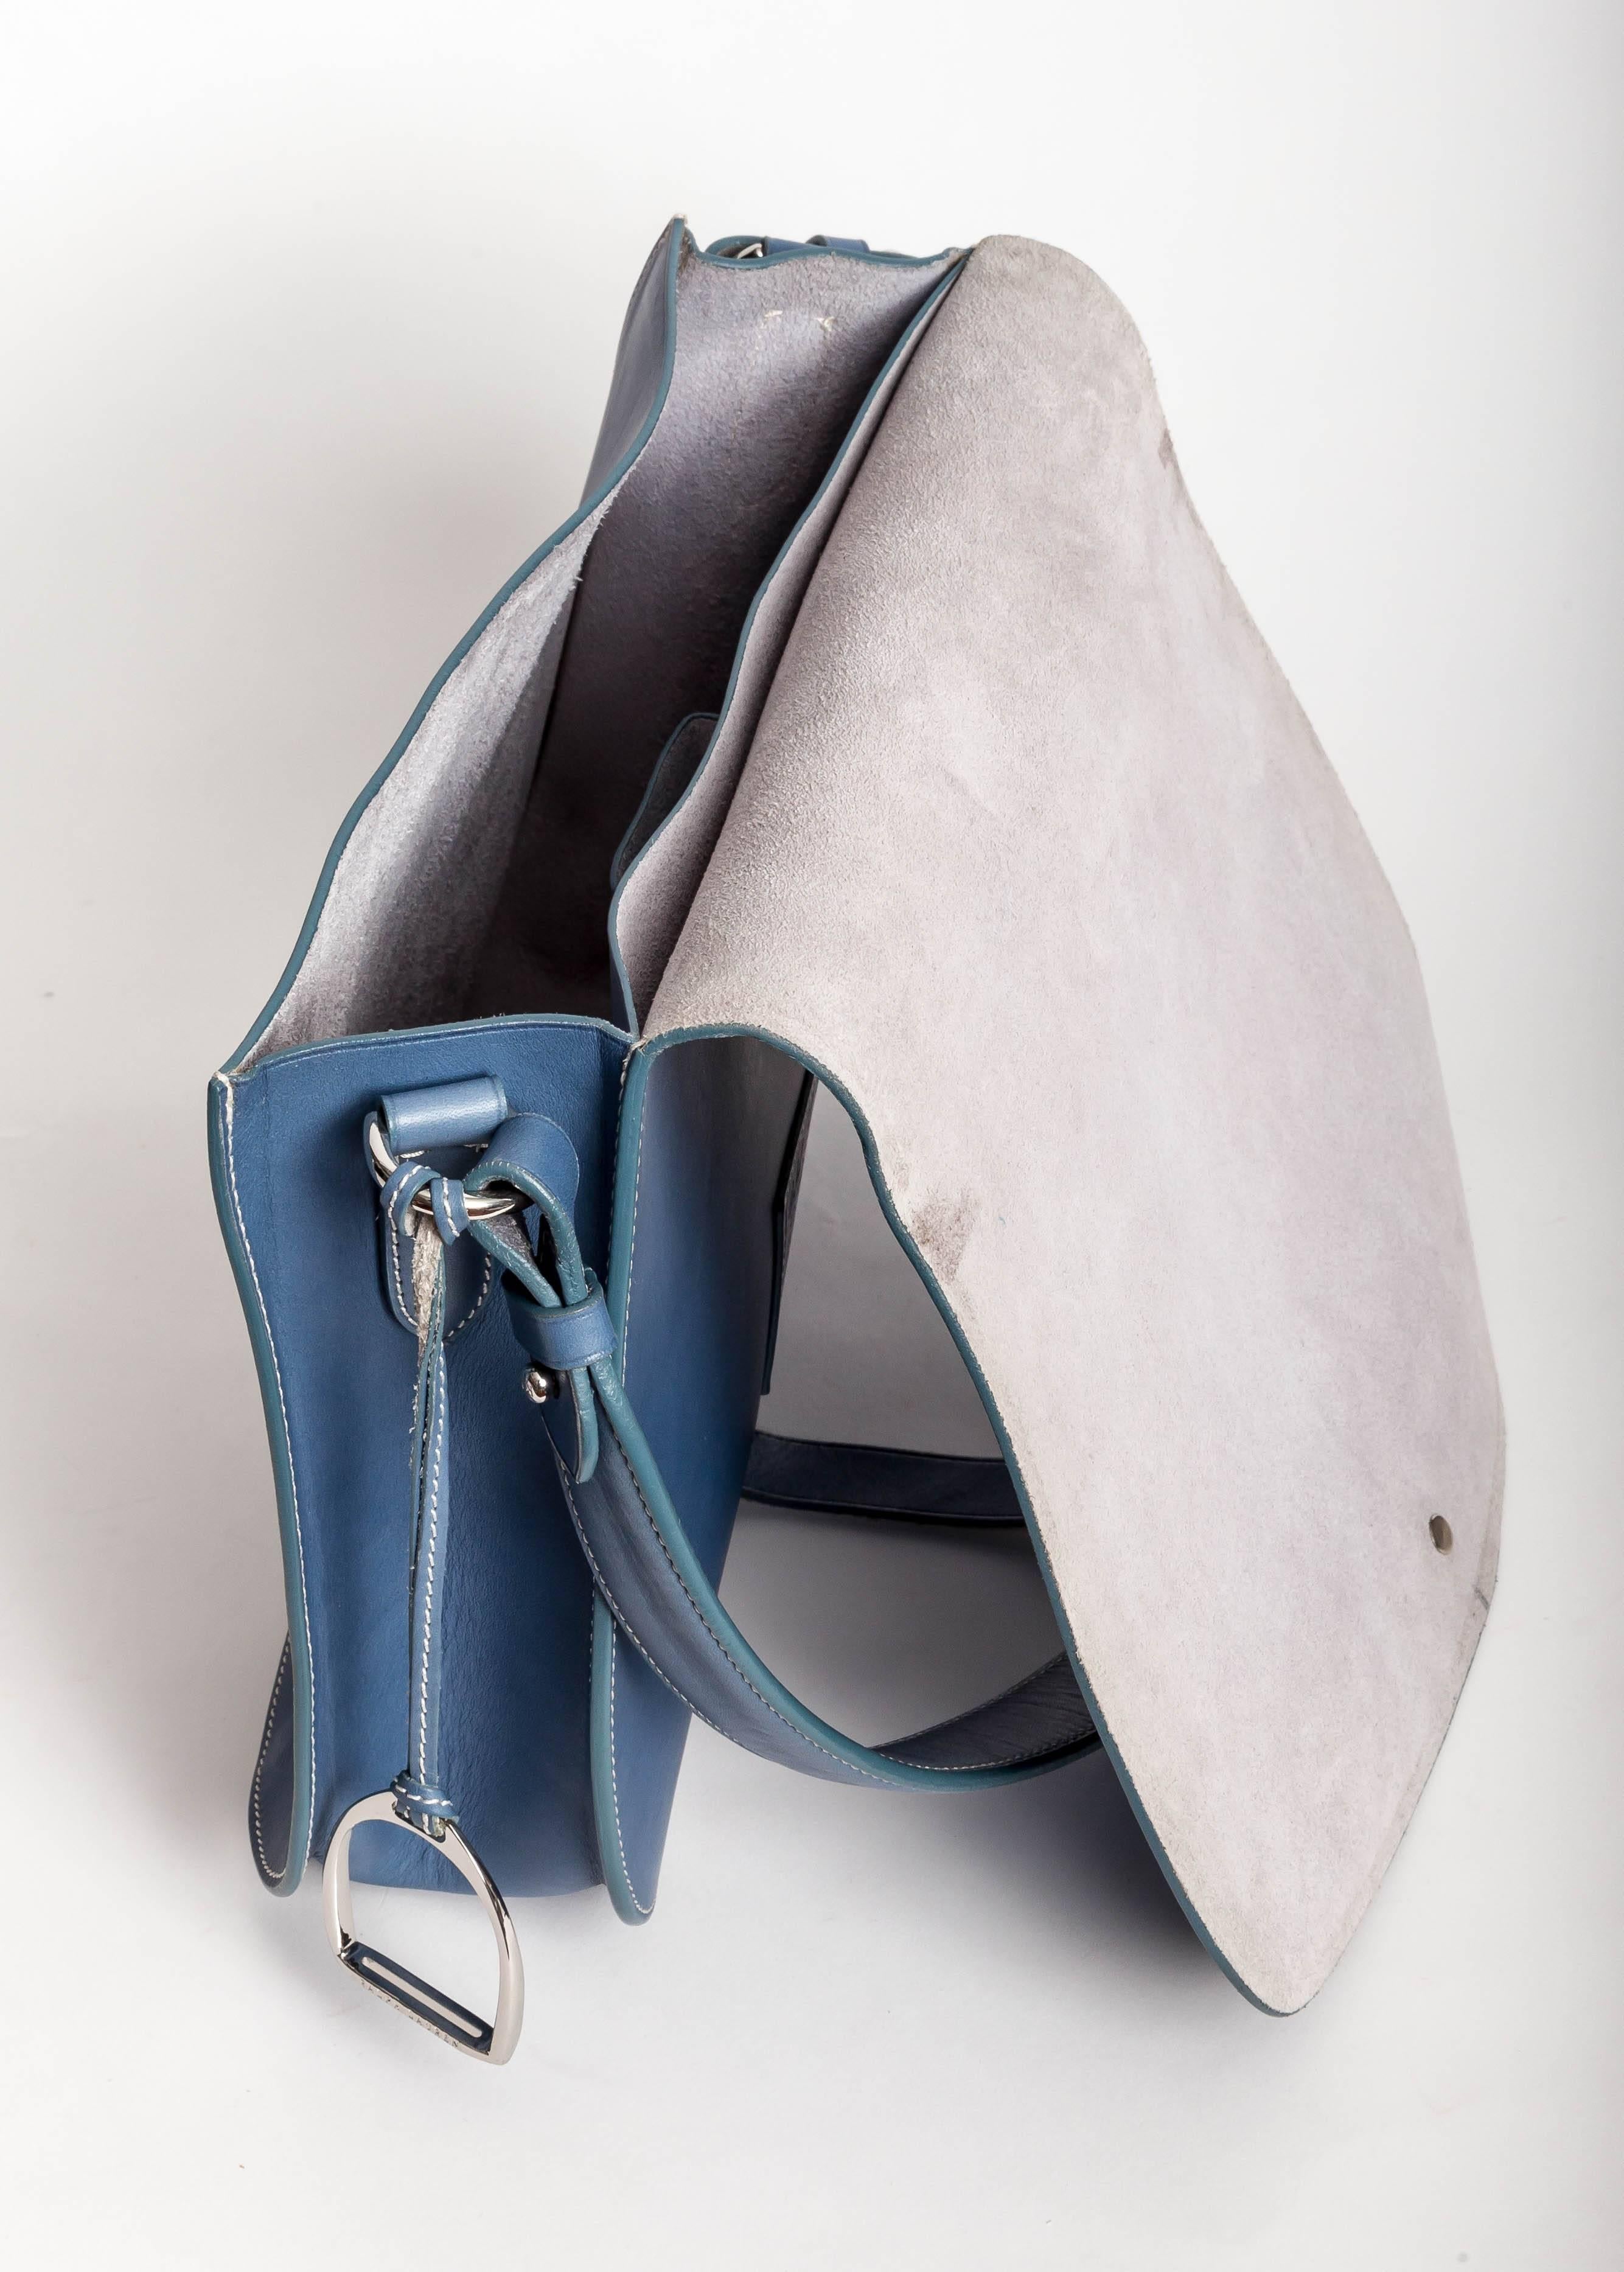 Ralph Lauren Collection Medium Saddle Bag in Sky Blue  2